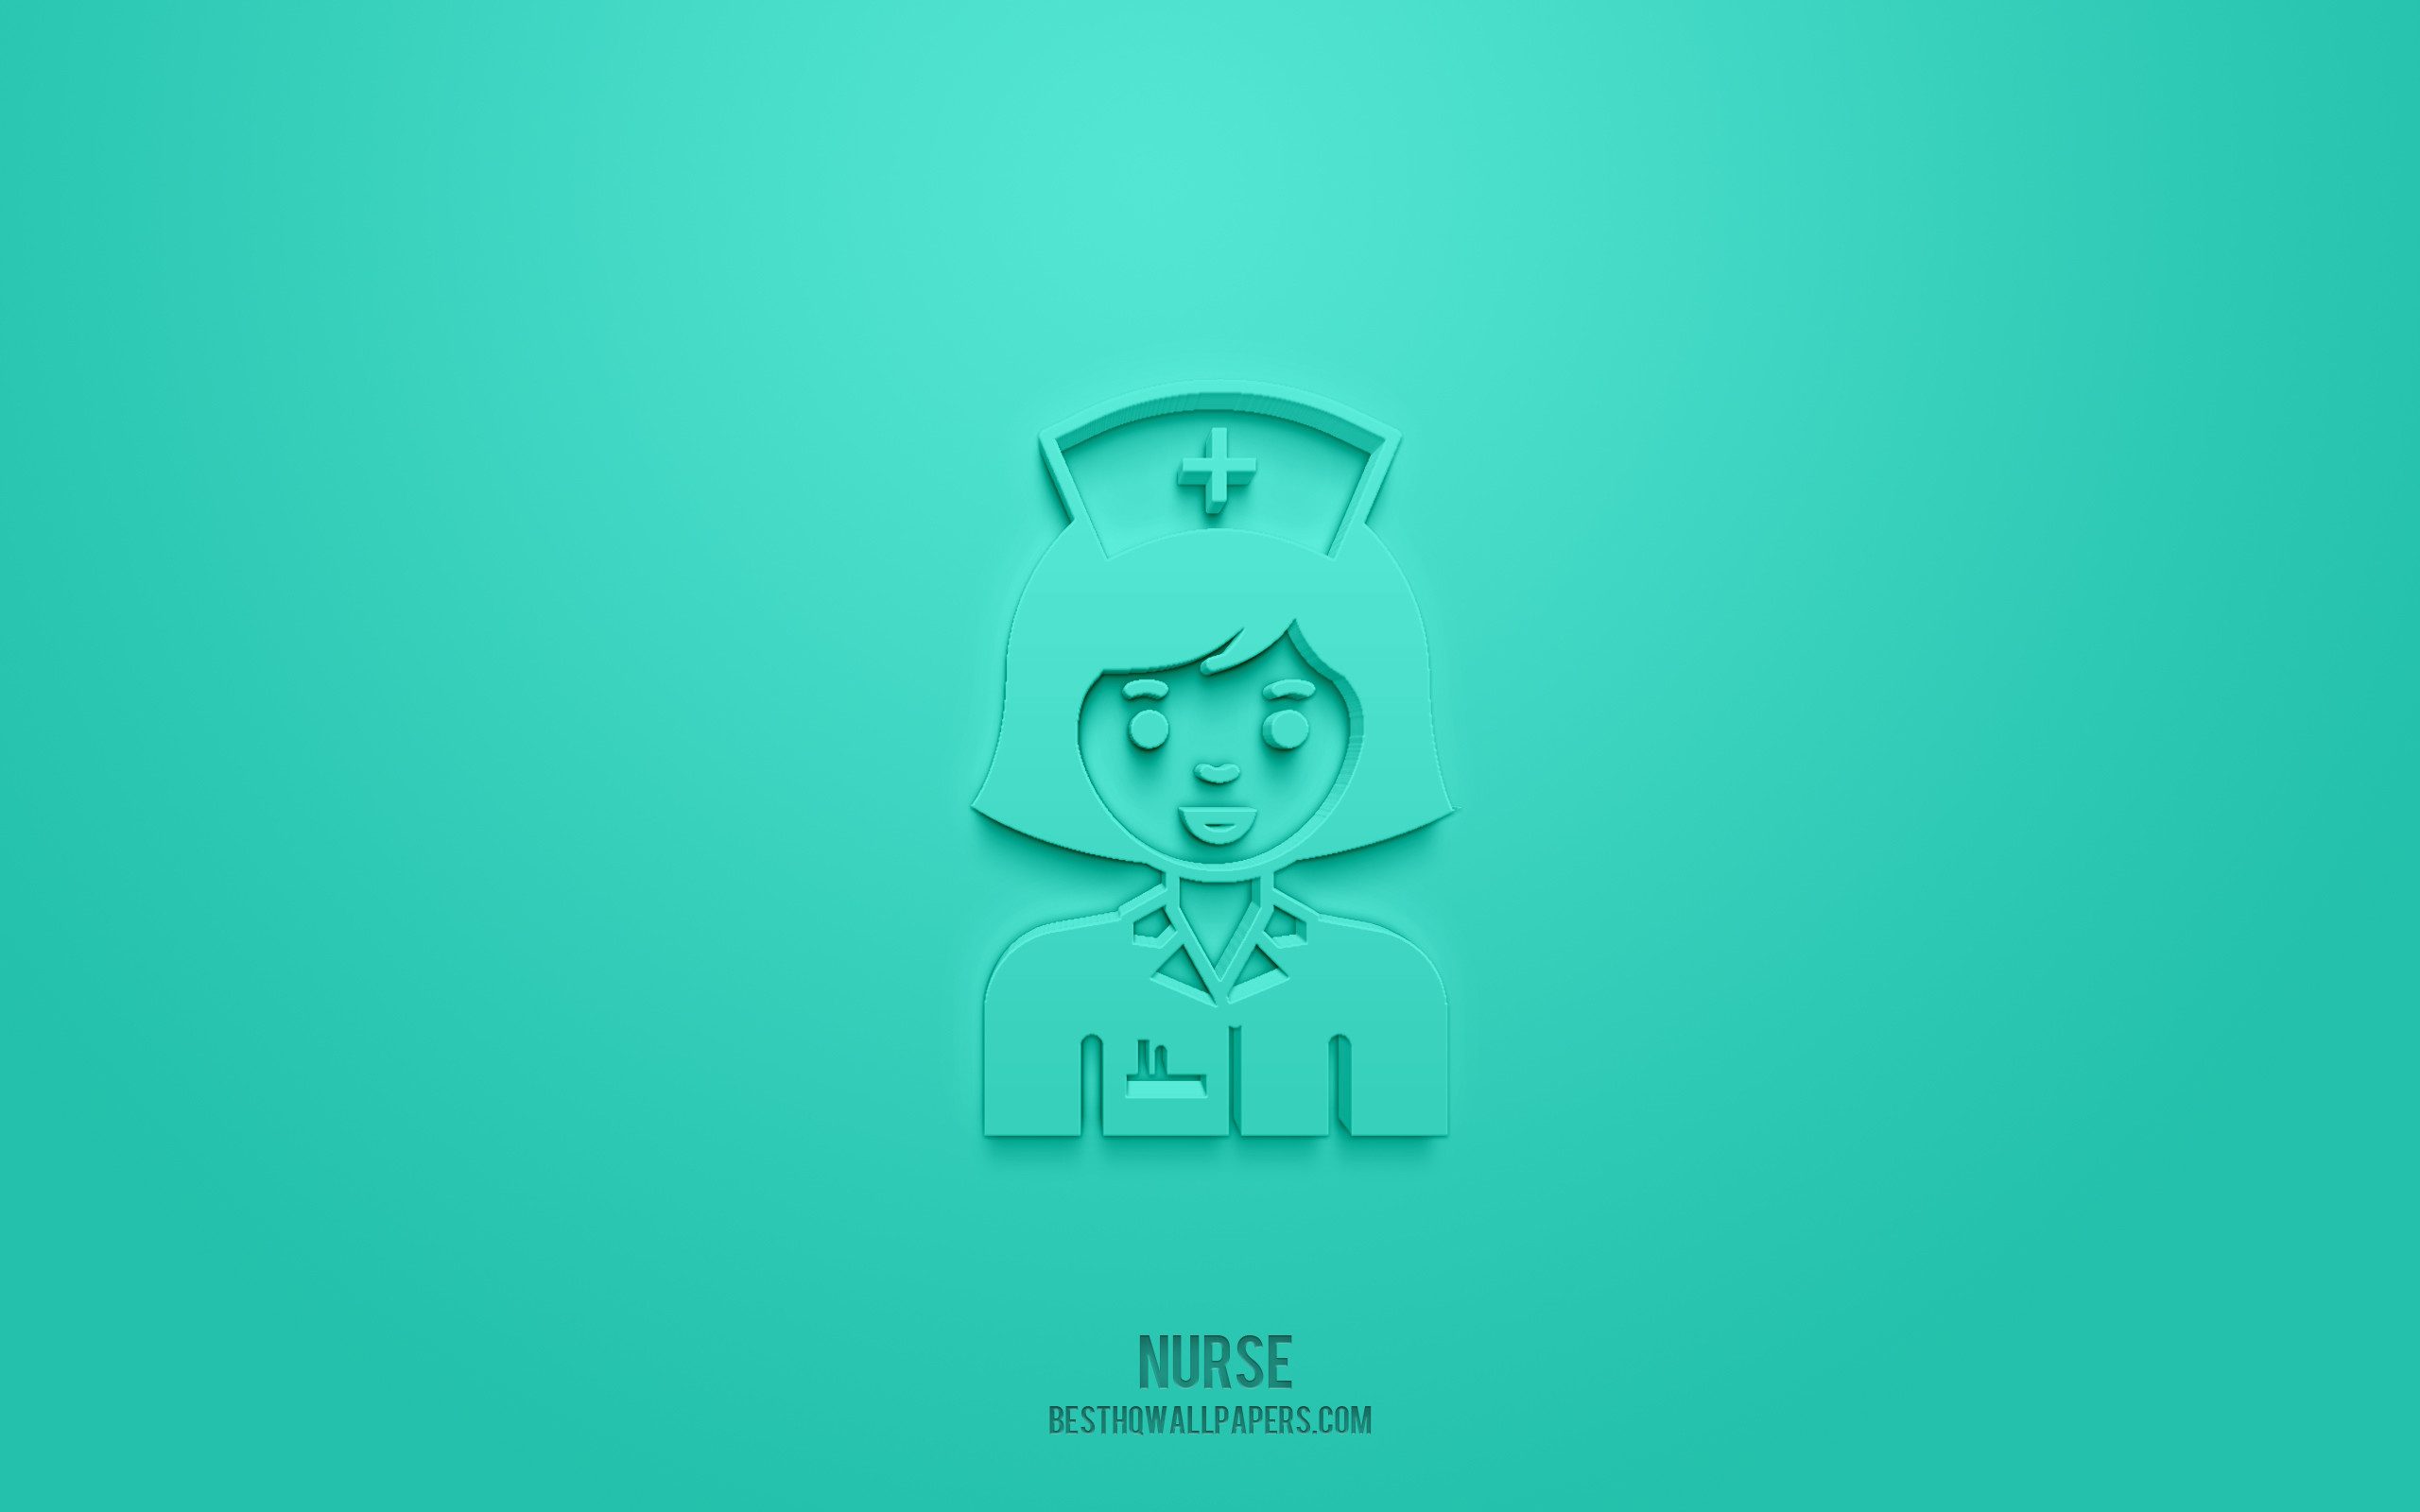 Nurse Wallpaper (best Nurse Wallpaper and image) on WallpaperChat